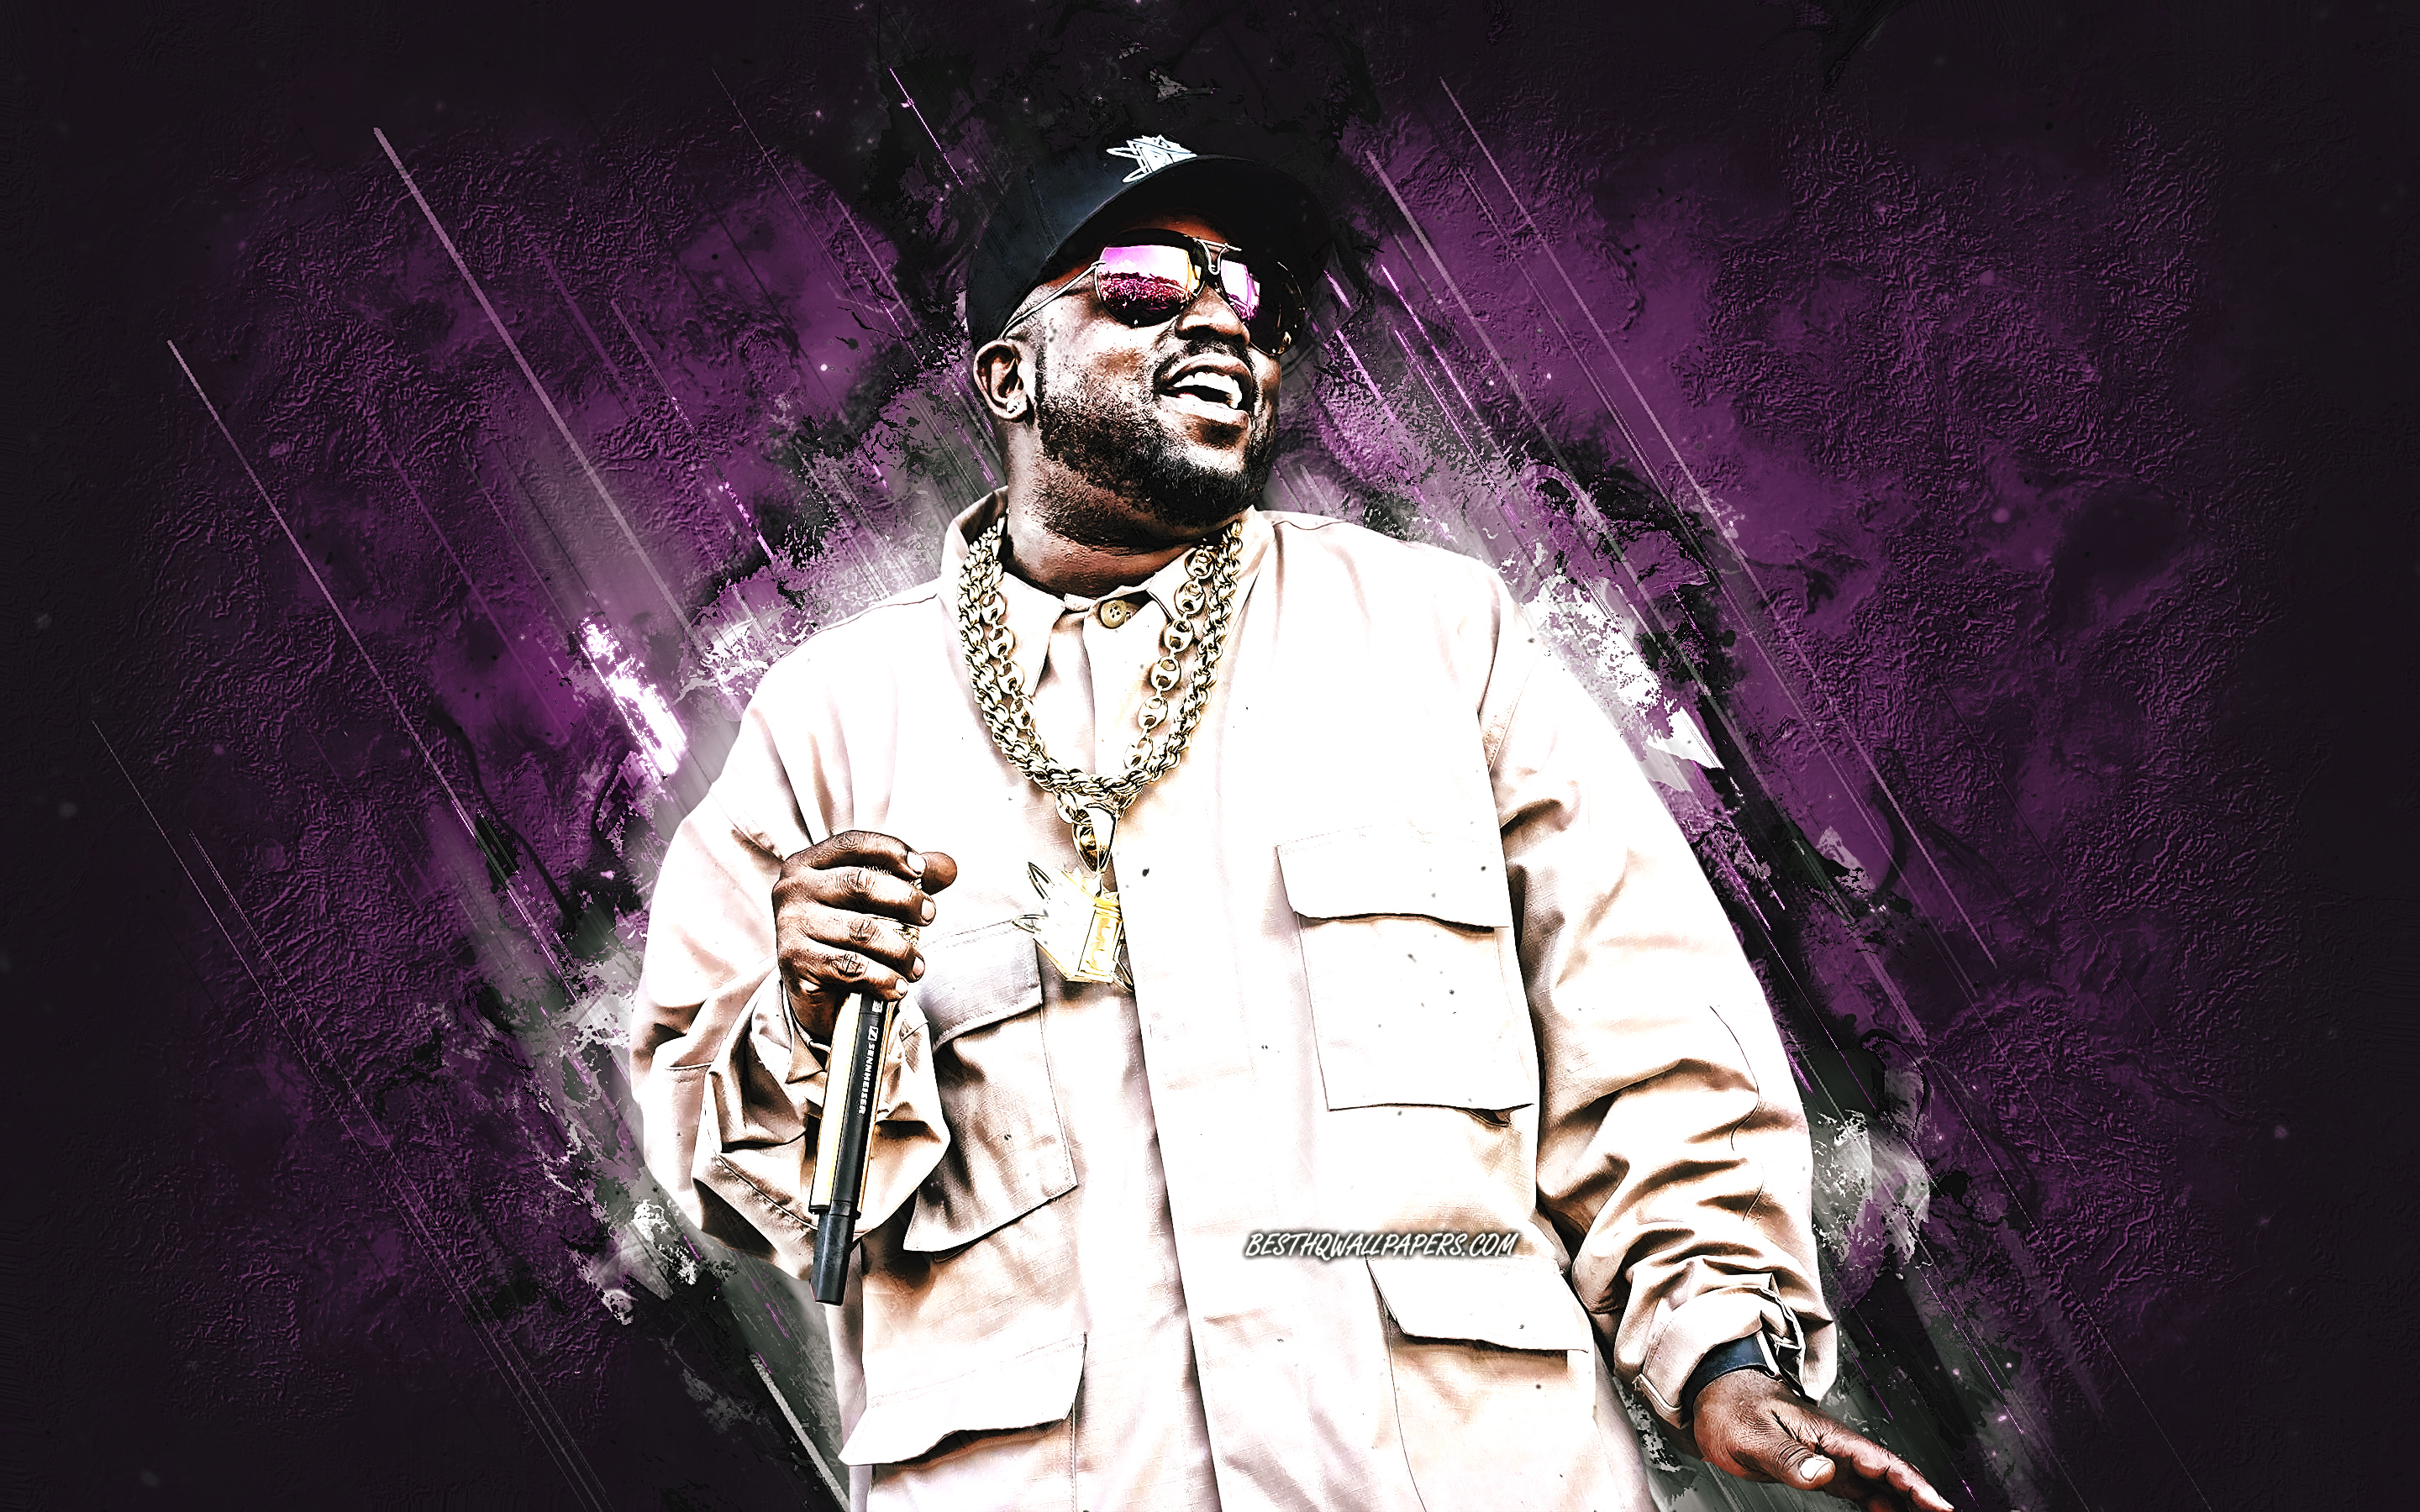 Download wallpaper Big Boi, American rapper, Antwan Andre Patton, portrait, purple stone background, creative art for desktop with resolution 2880x1800. High Quality HD picture wallpaper